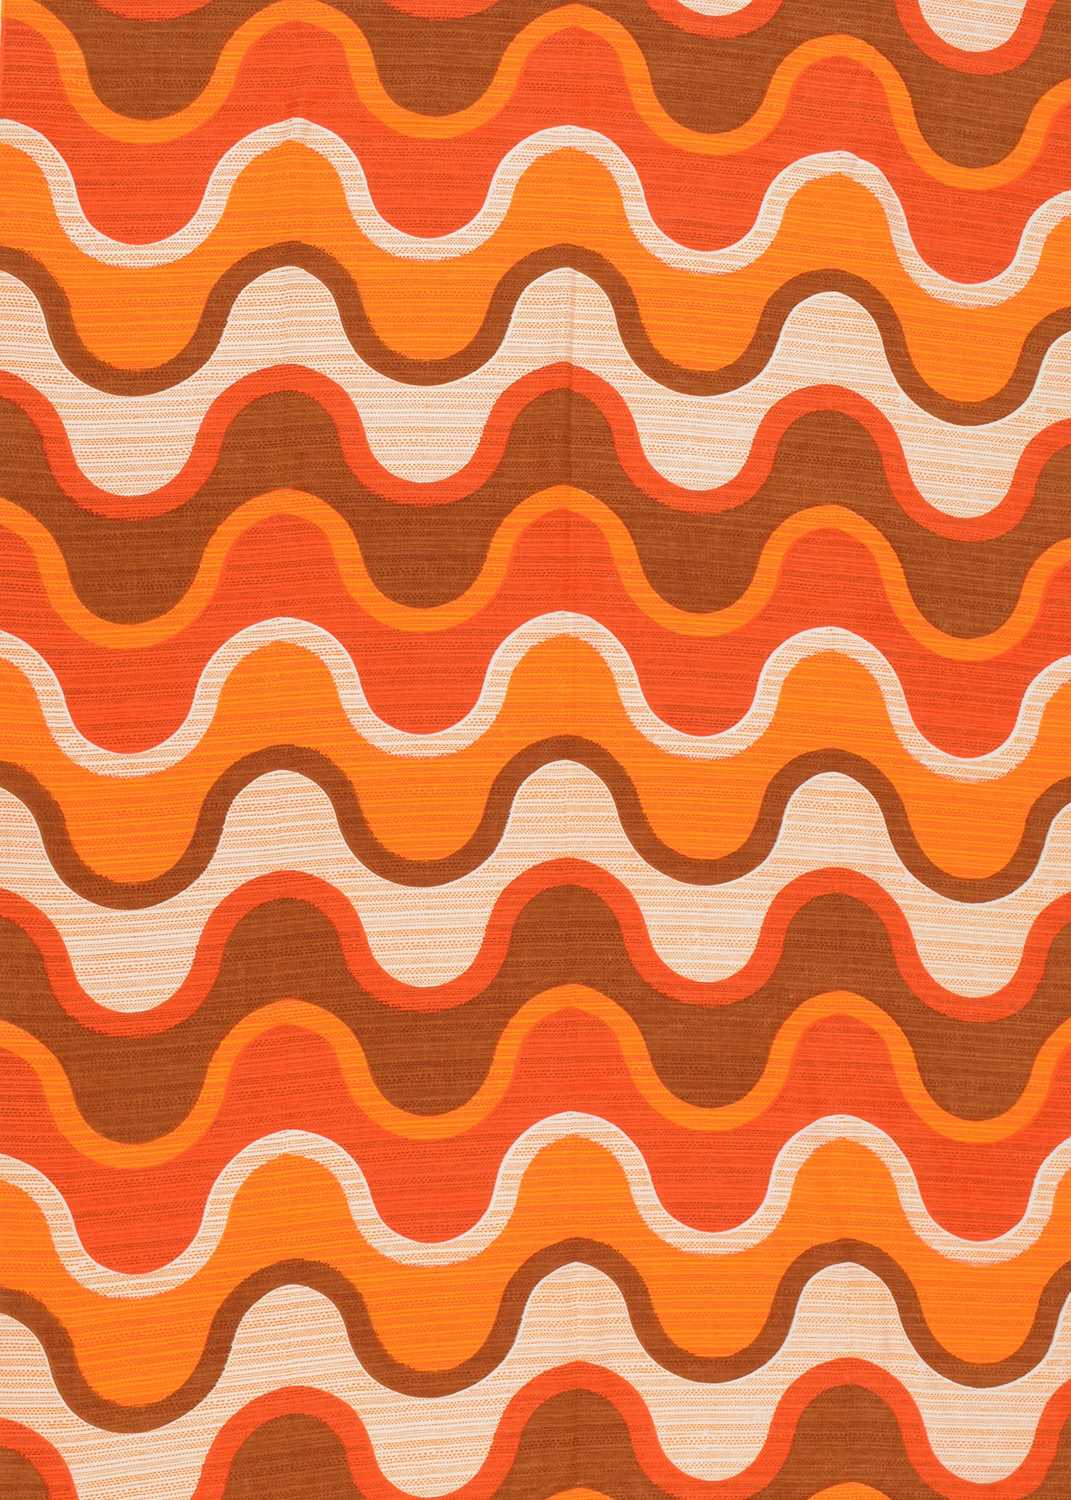 Lot 1124 - Orange and Brown swirl fabric